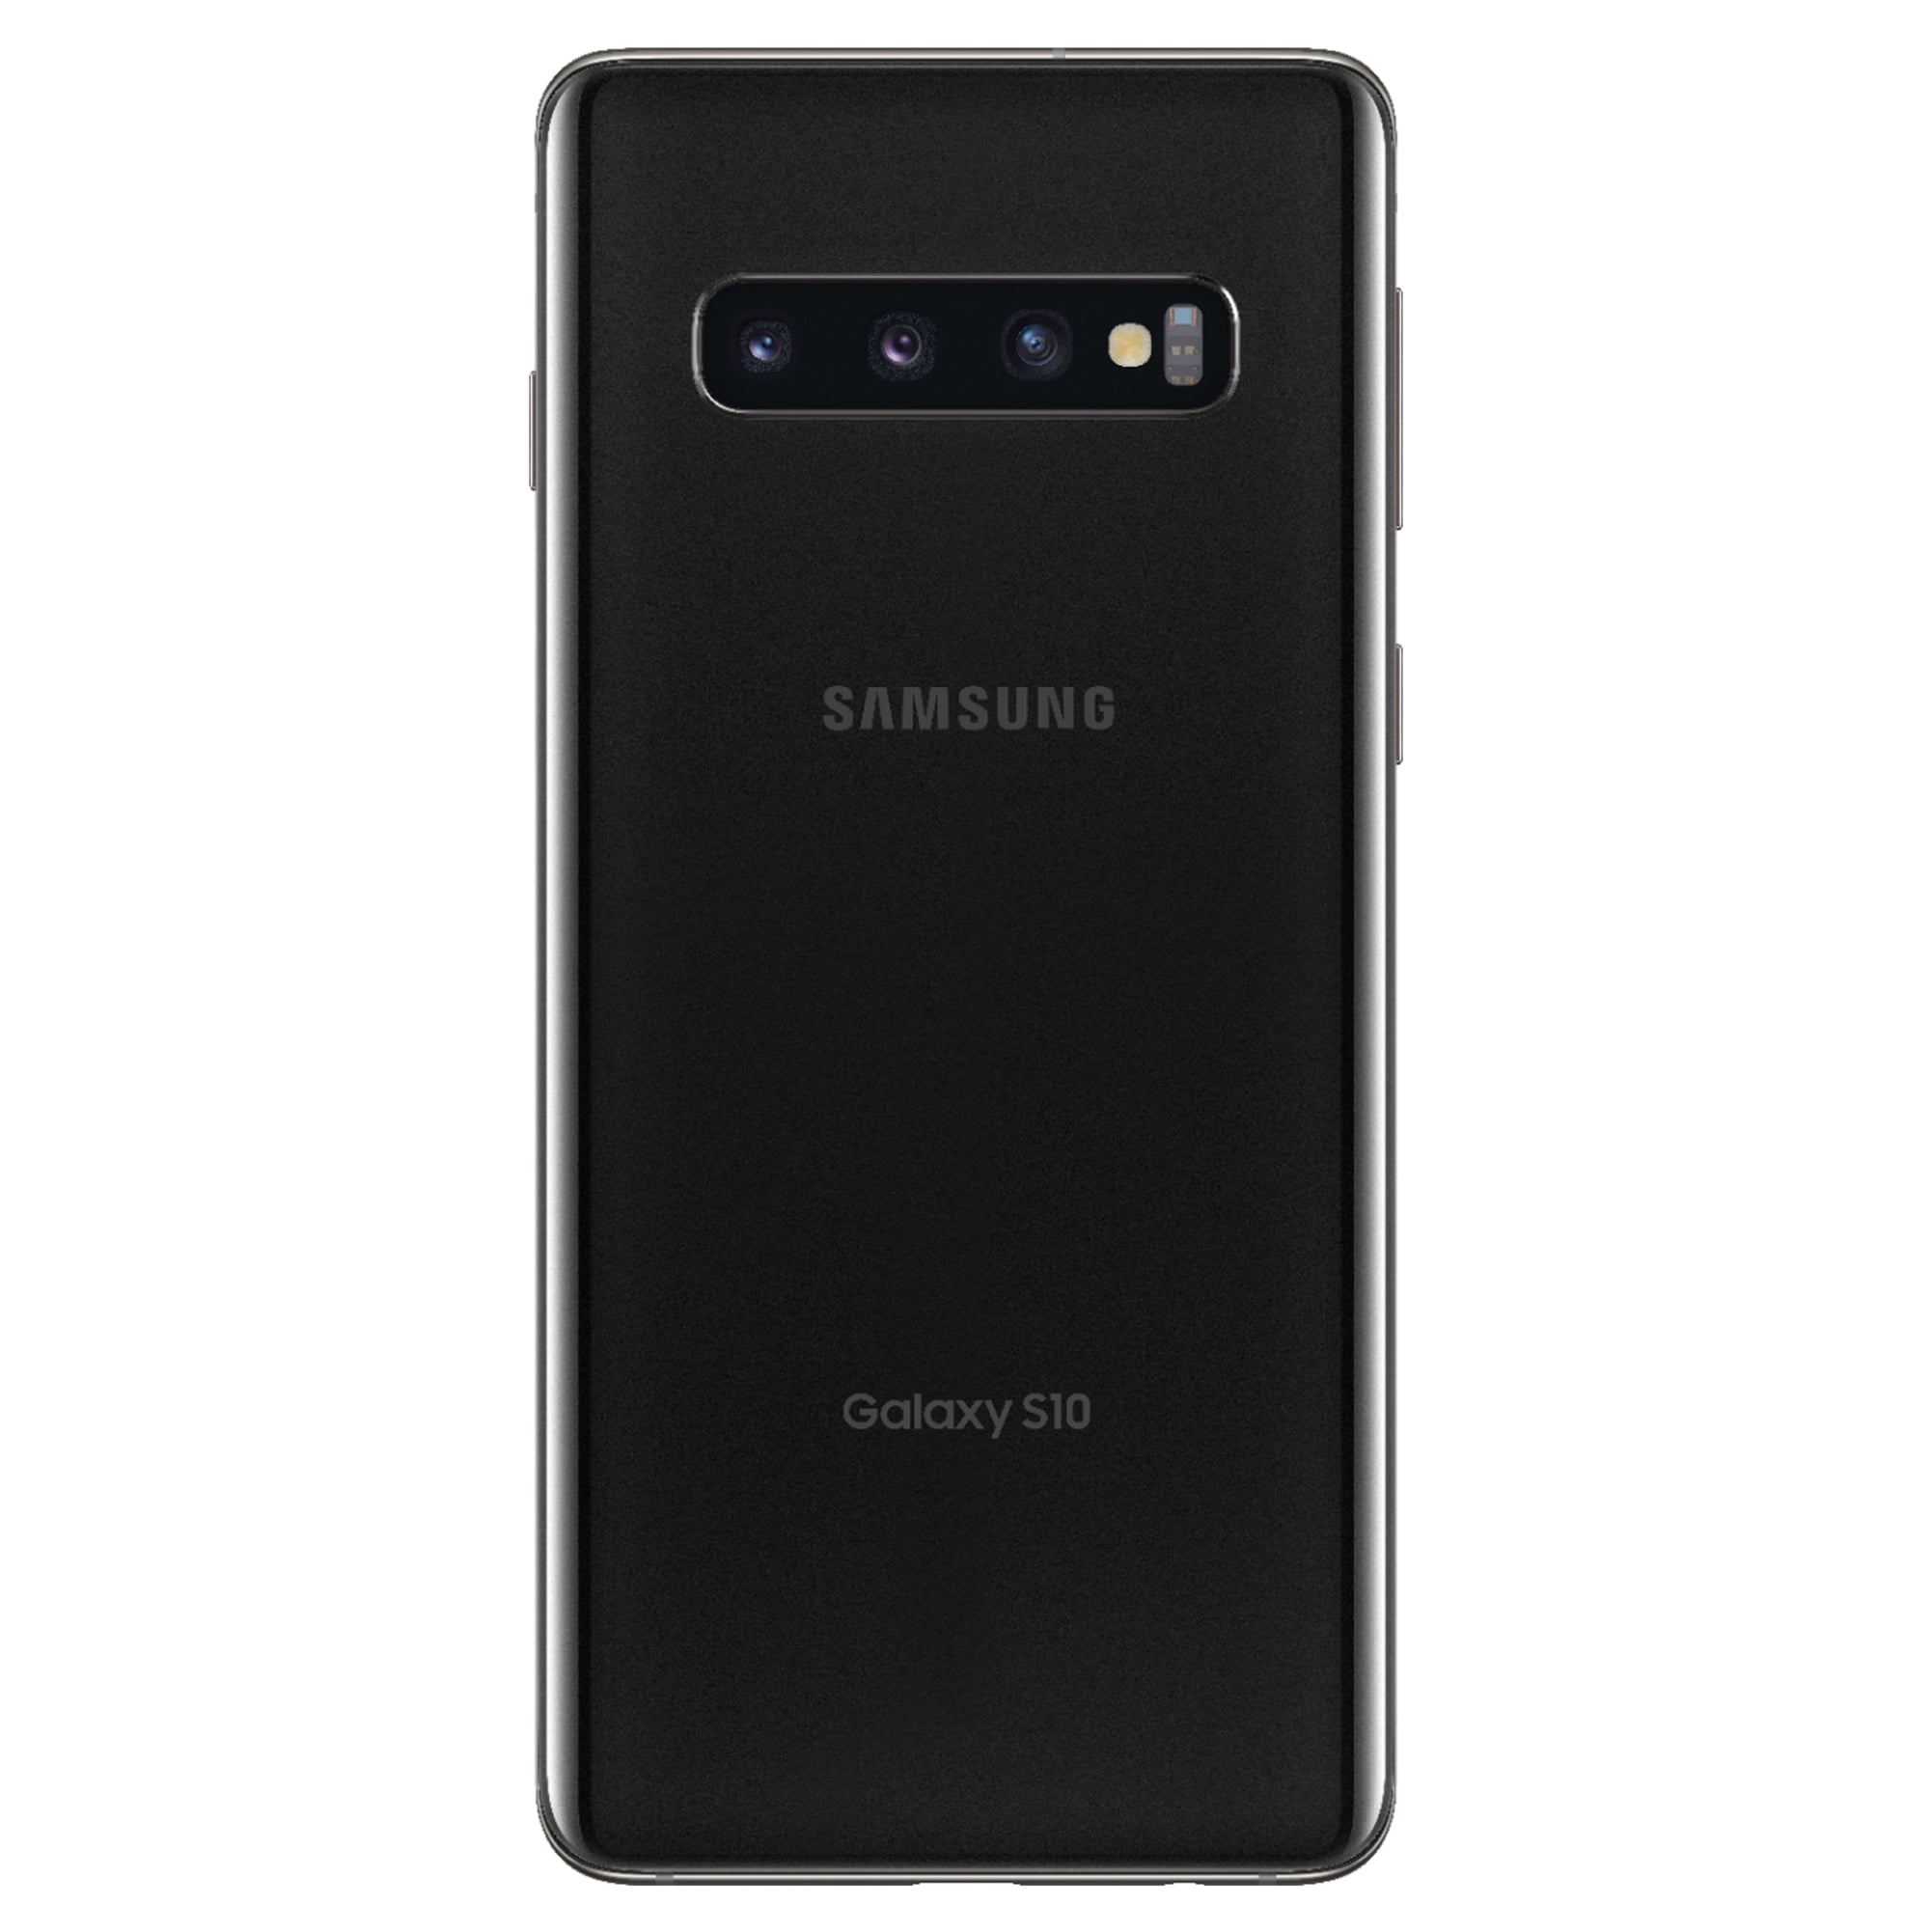 Galaxy S10 Prism Black 128 GB-